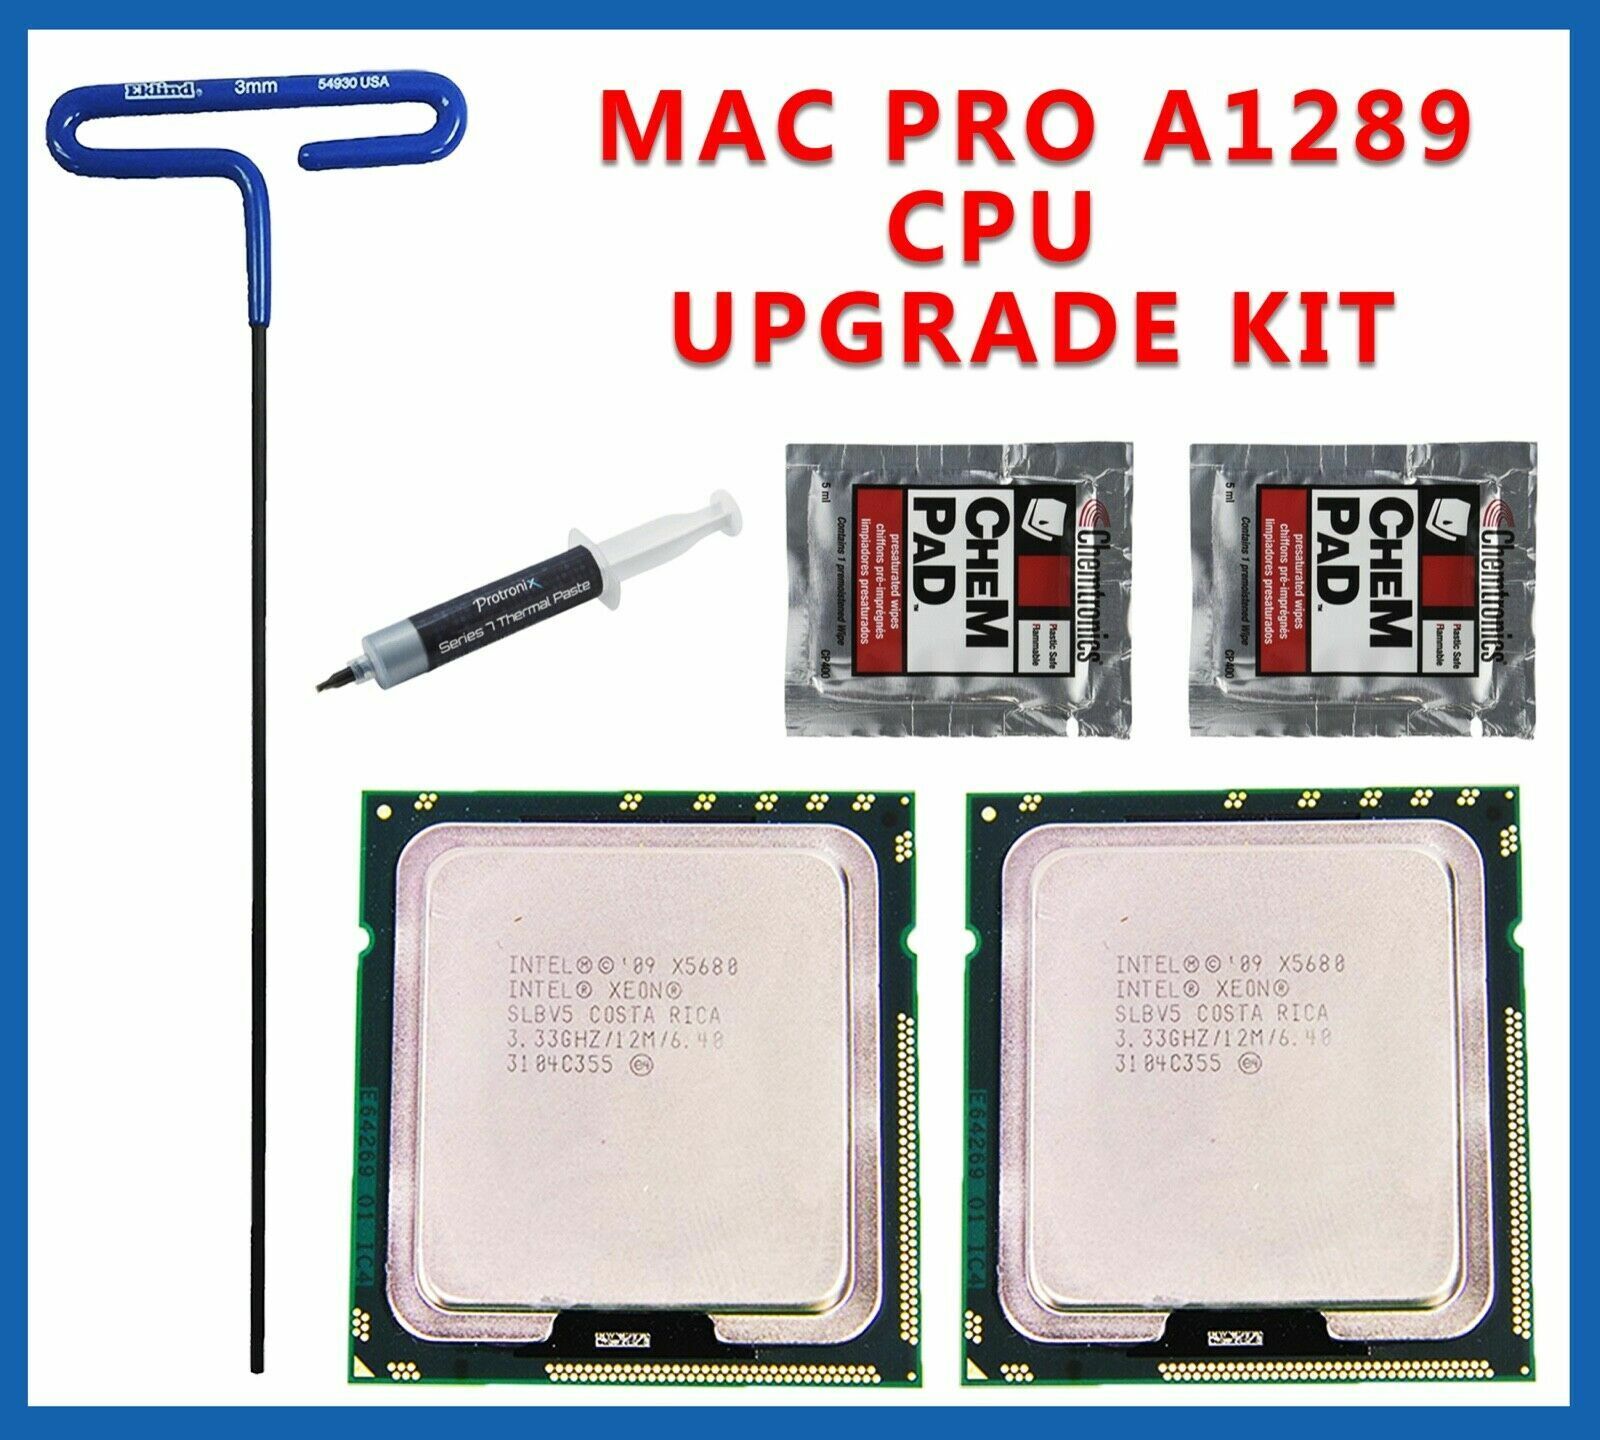 12 Core X5680 x2 3.33Hz XEON CPUs 2010 2012 Apple Mac Pro 5,1 upgrade kit twelve